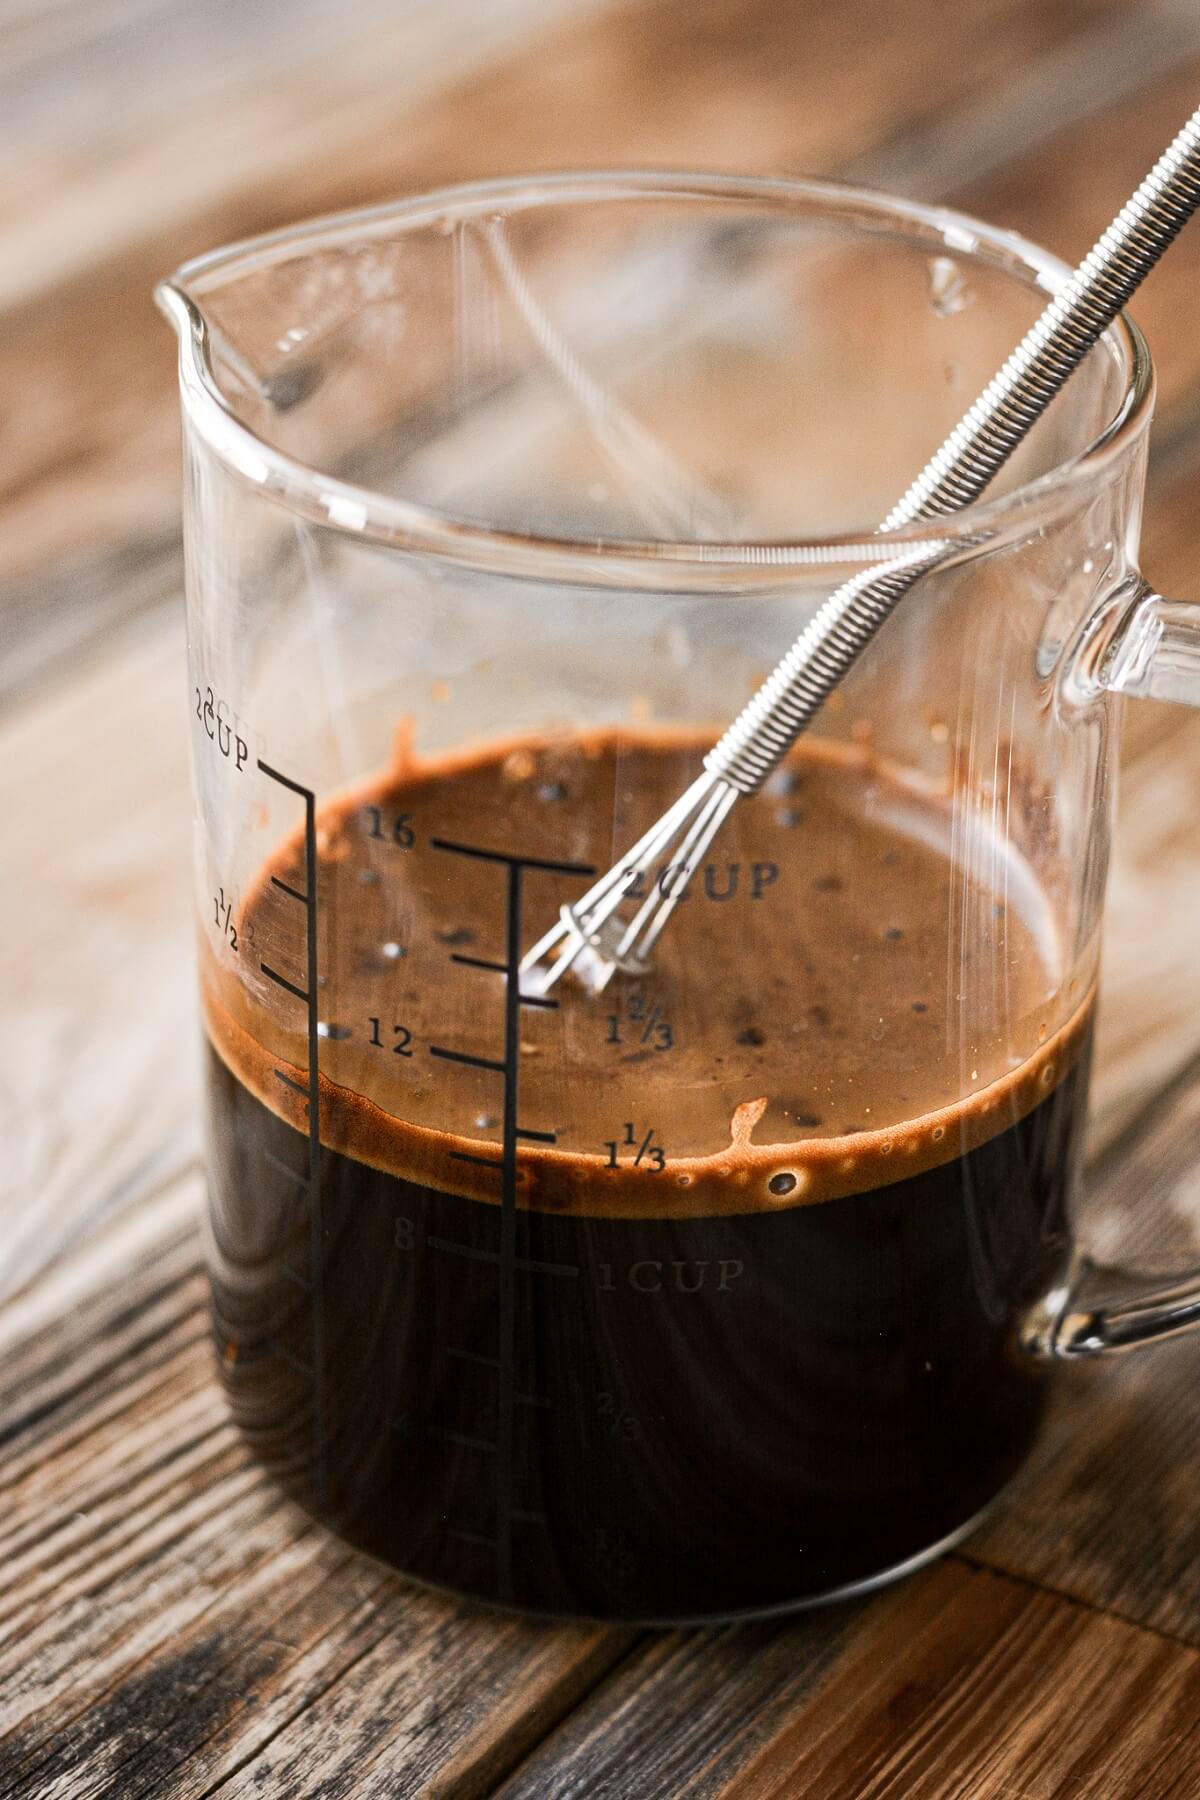 Glass measuring cup of espresso.